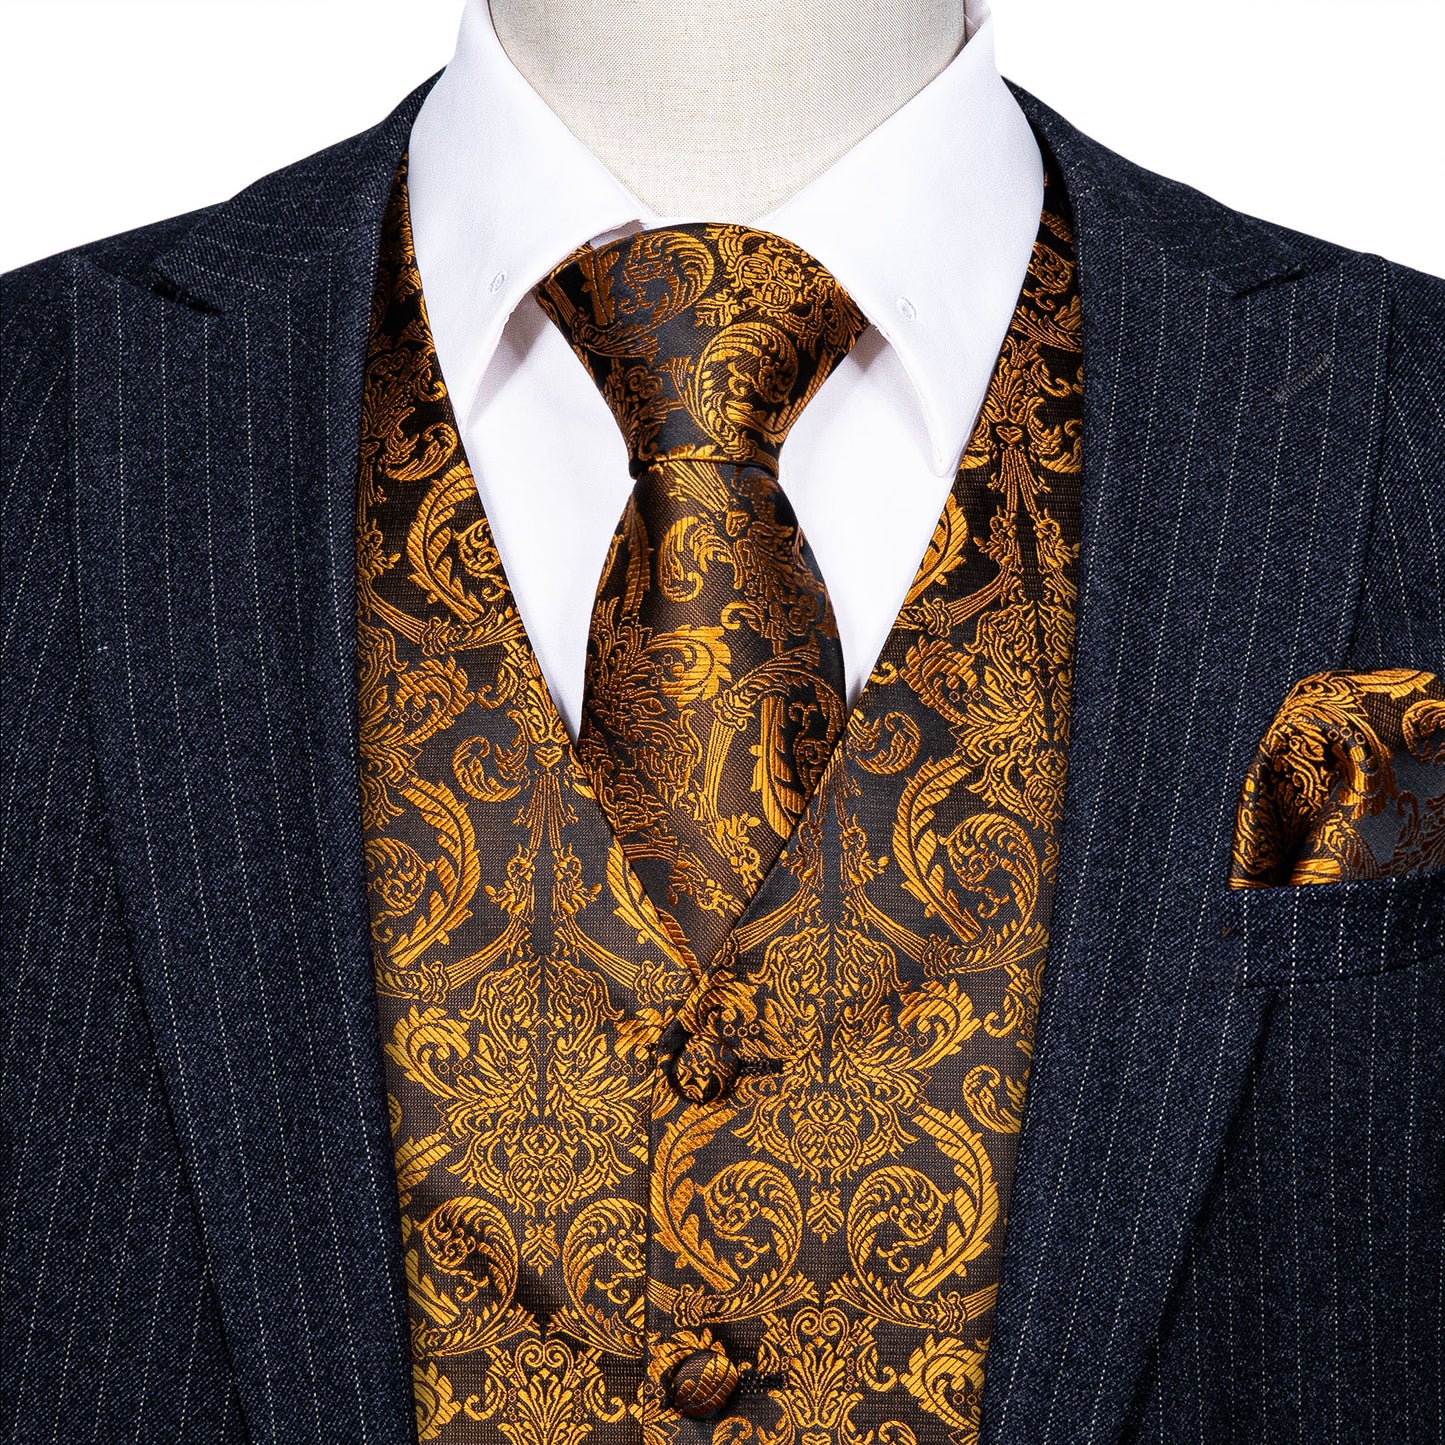 Designer Floral Waistcoat Silky Novelty Vest Palace Golden